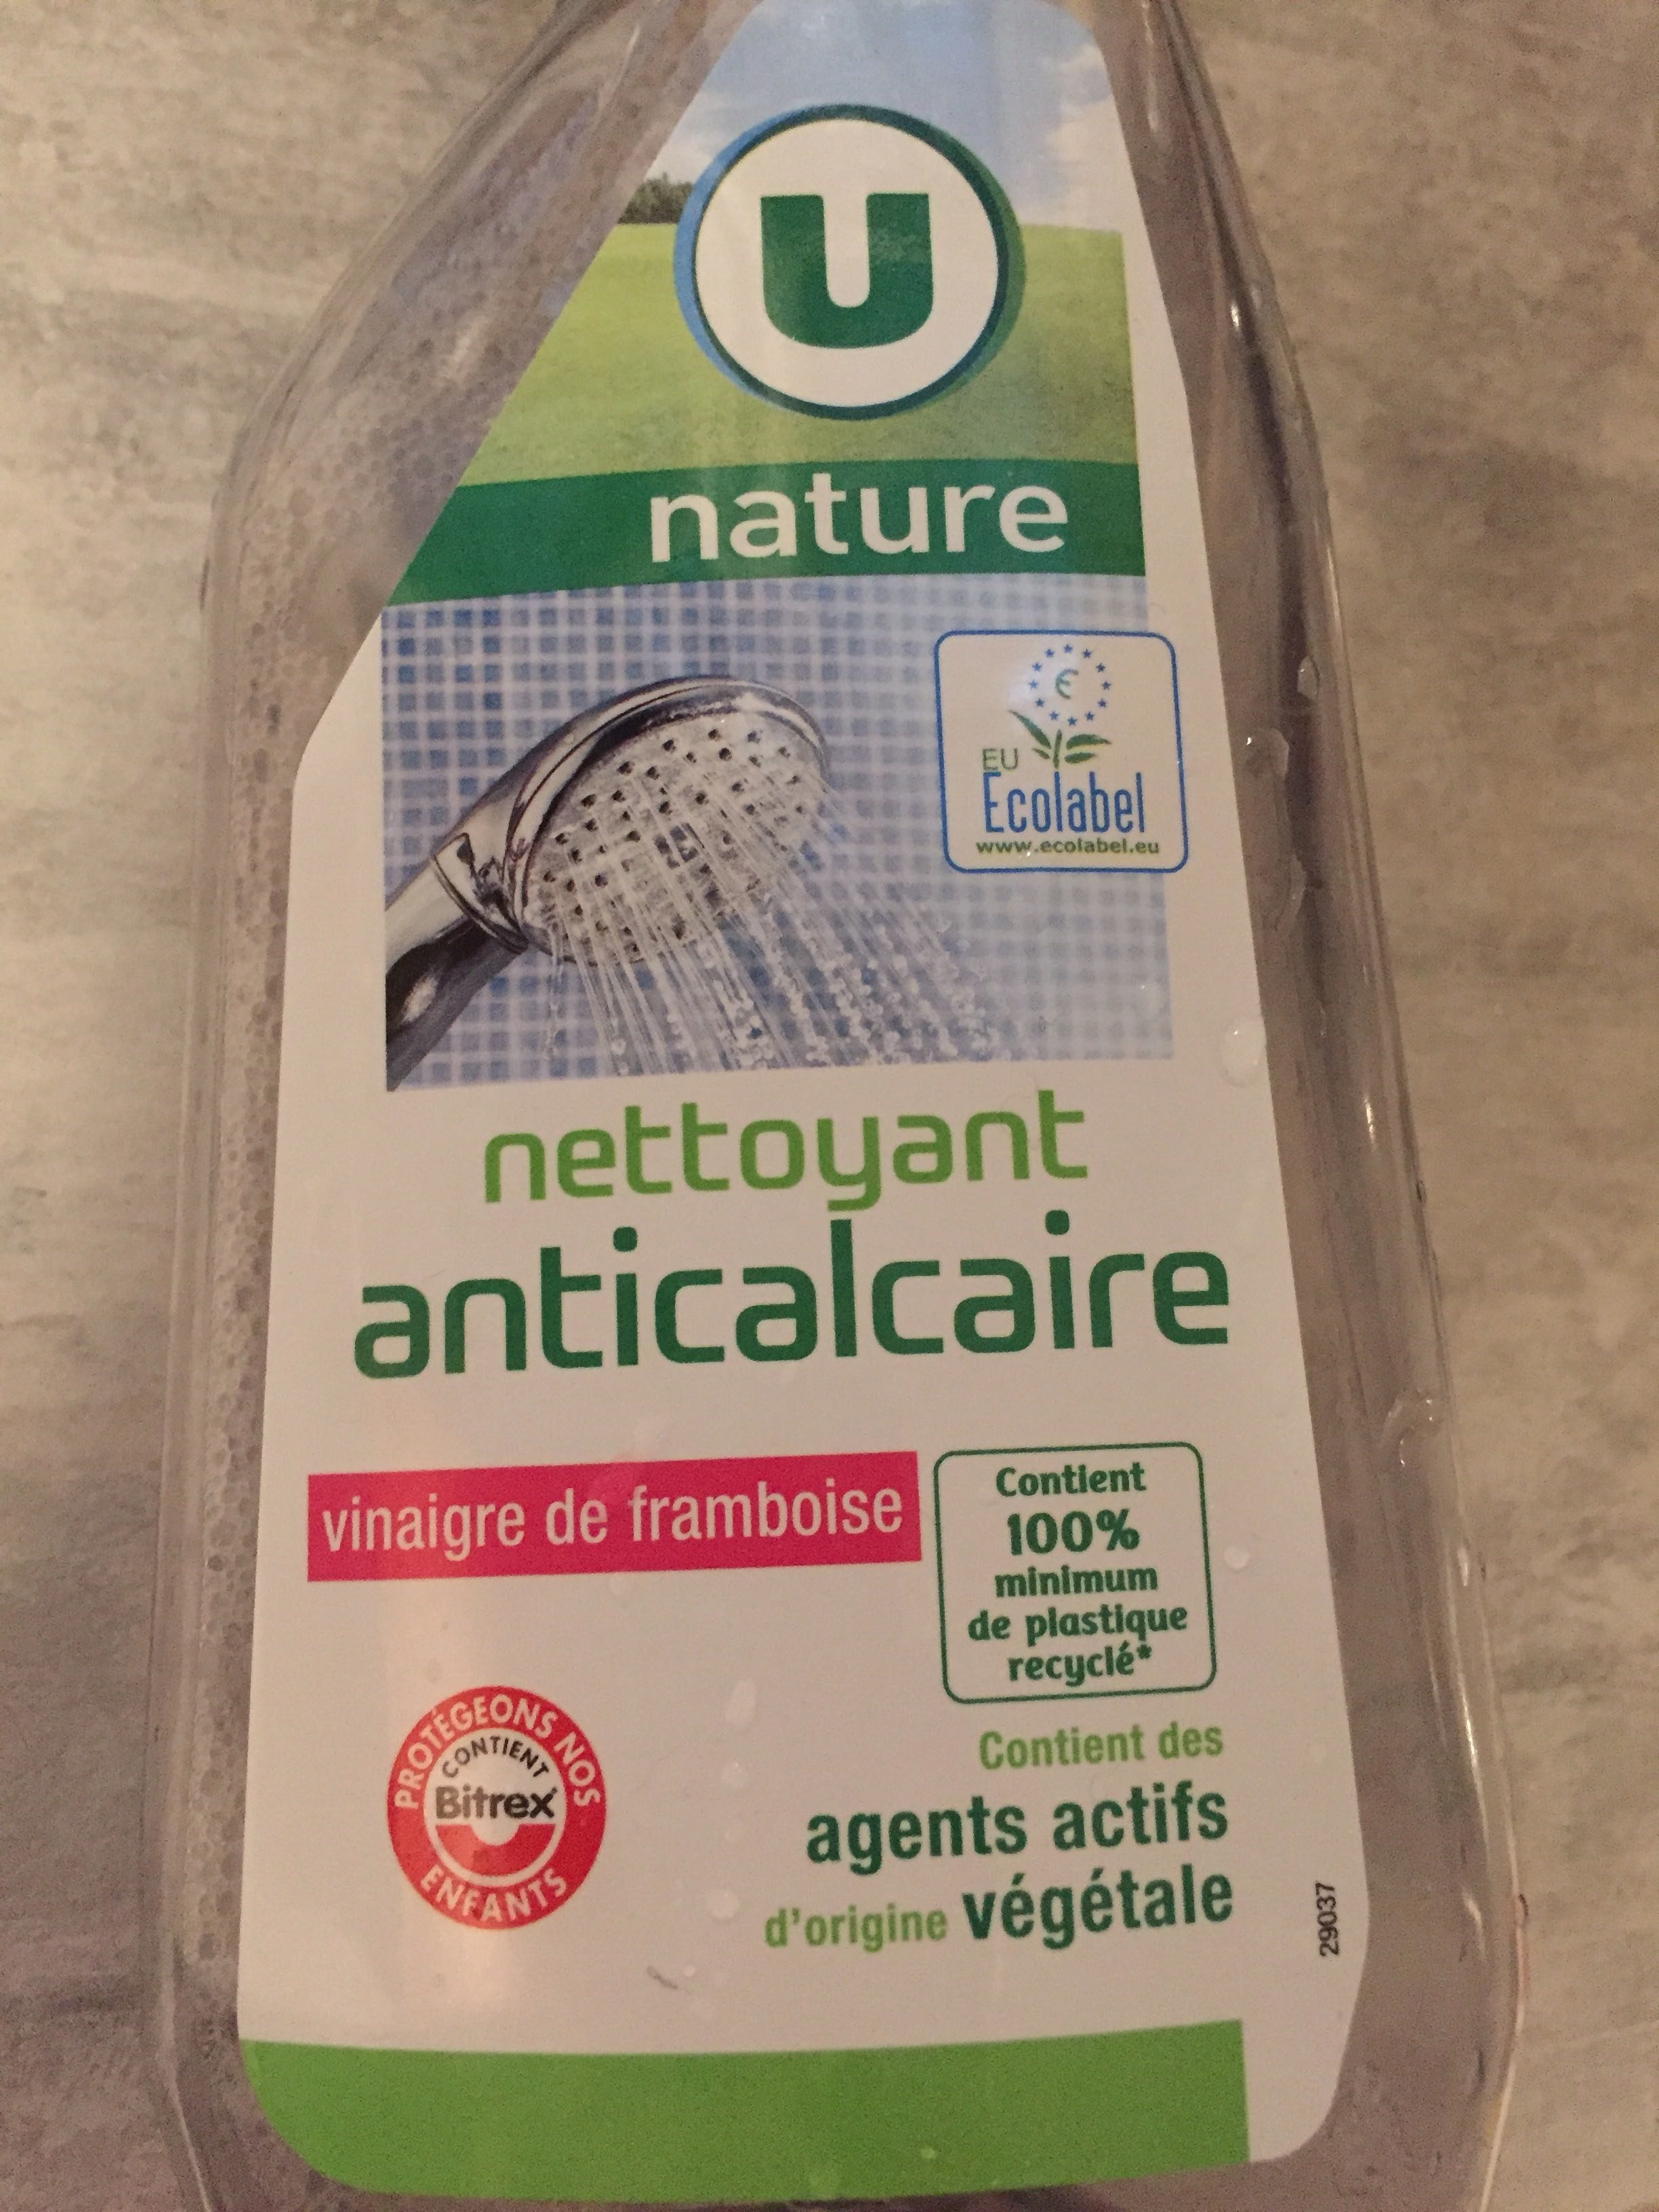 Nettoyant anticalcaire - Product - fr